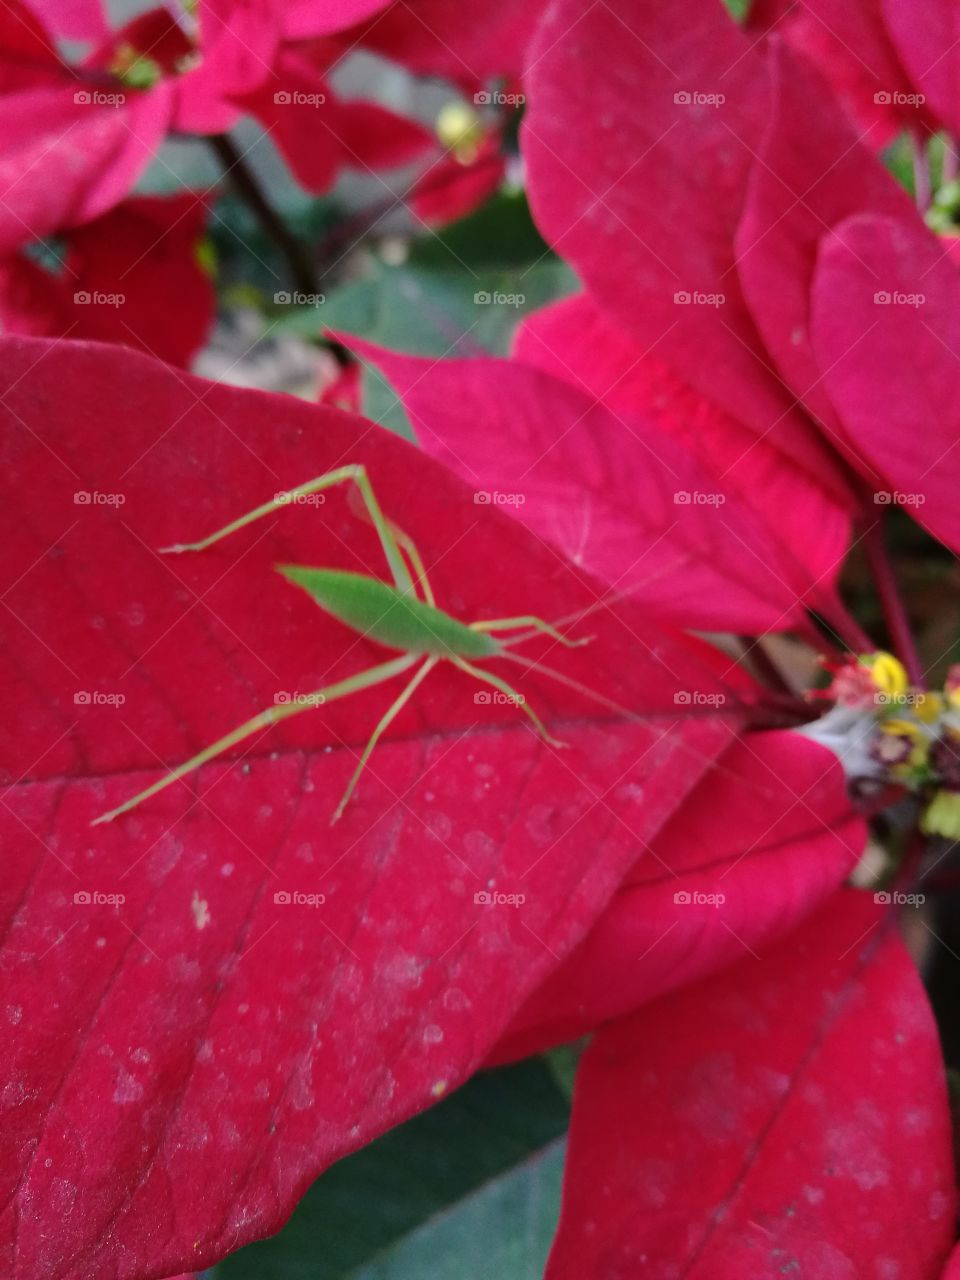 A small green grasshopper